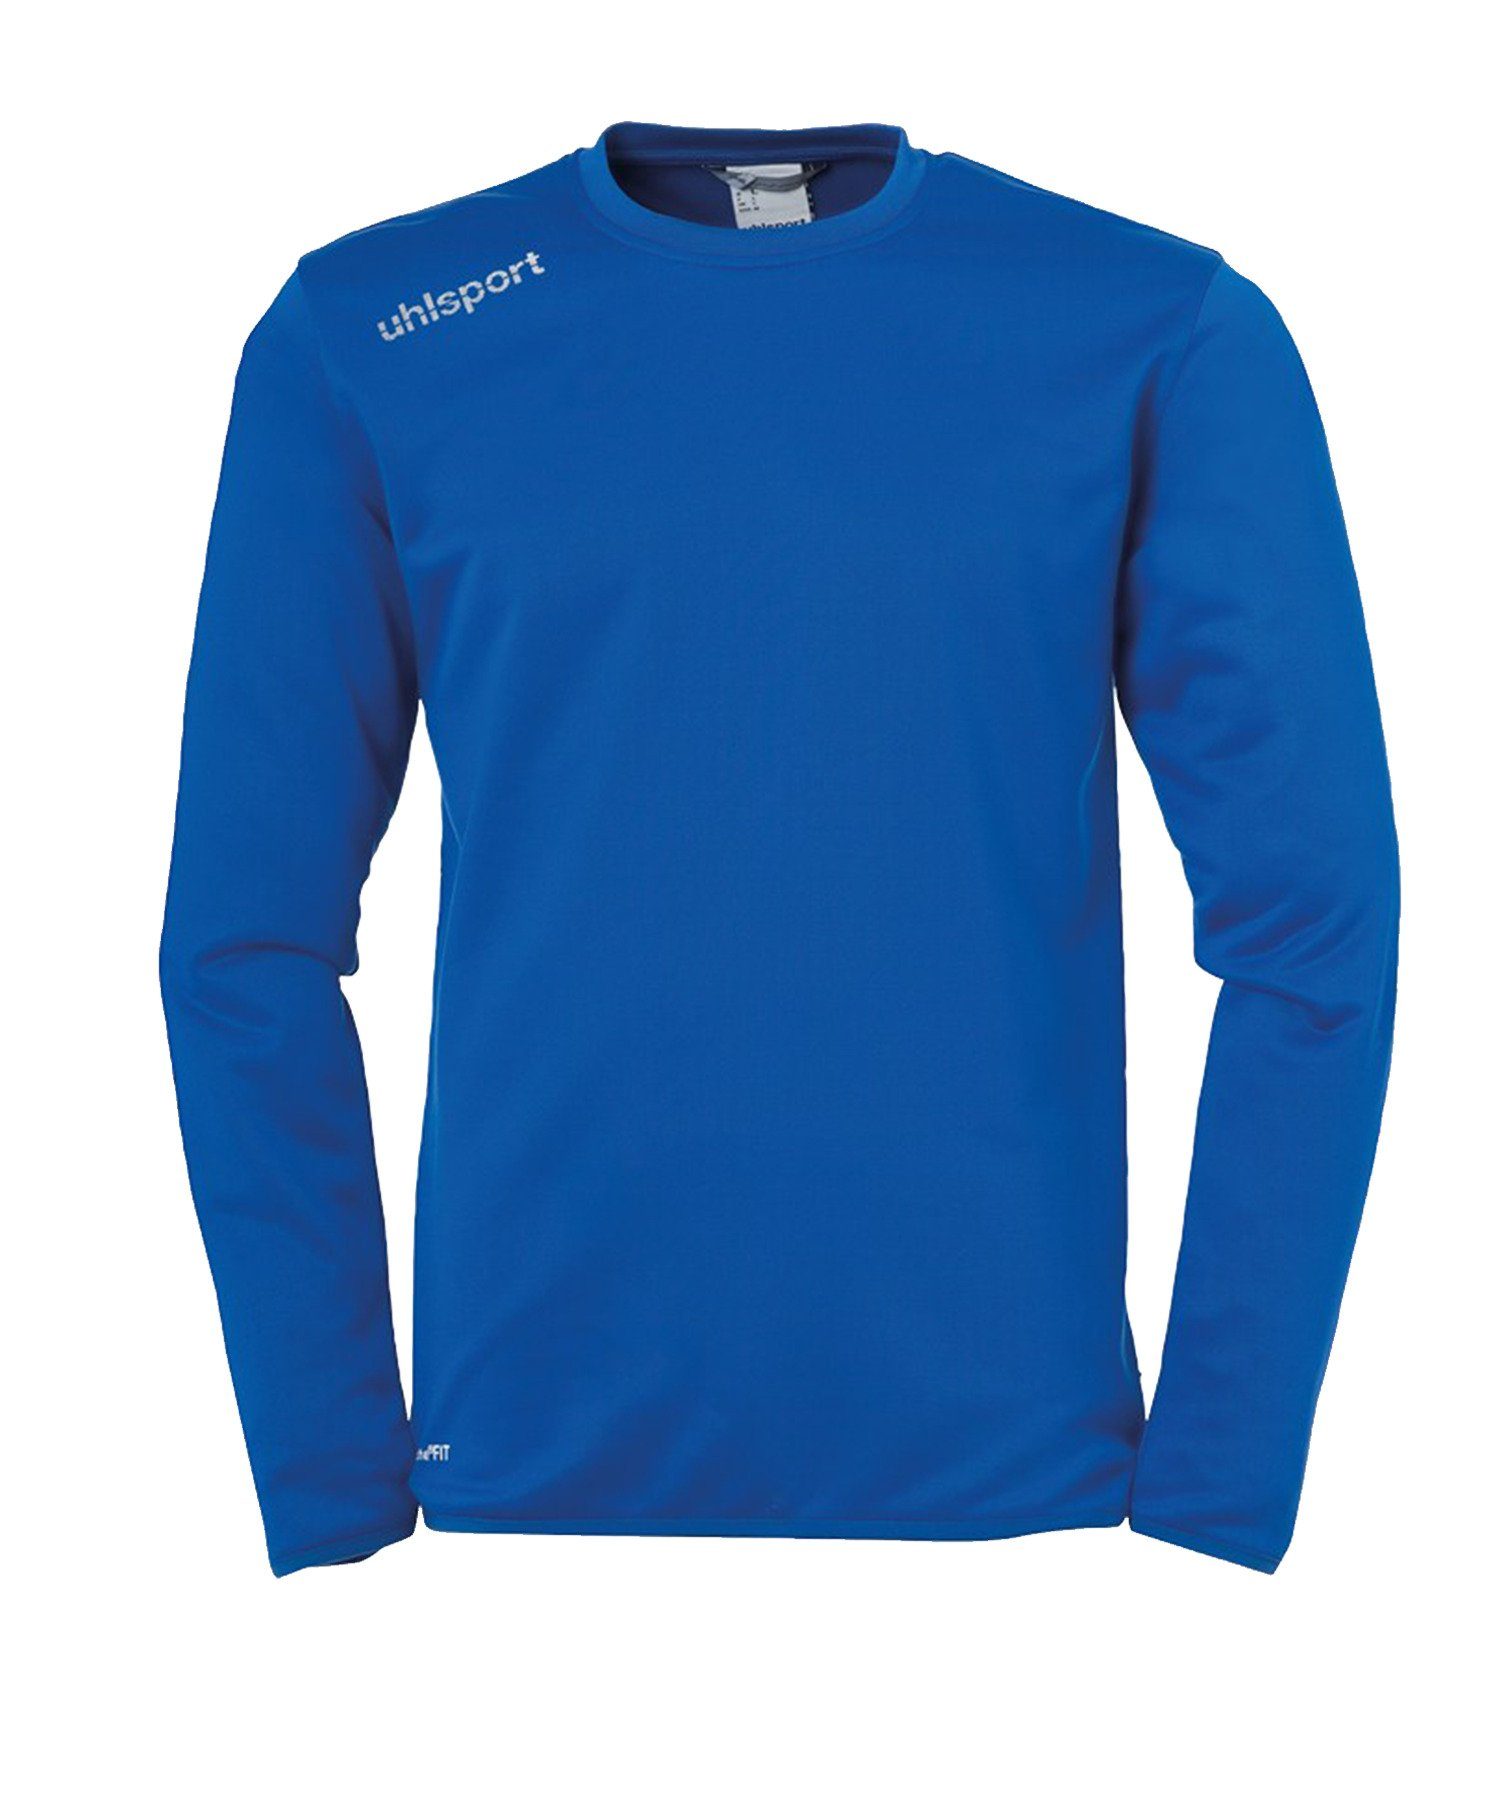 uhlsport Sweatshirt Essential Trainingstop langarm blauWeiss | Sweatshirts